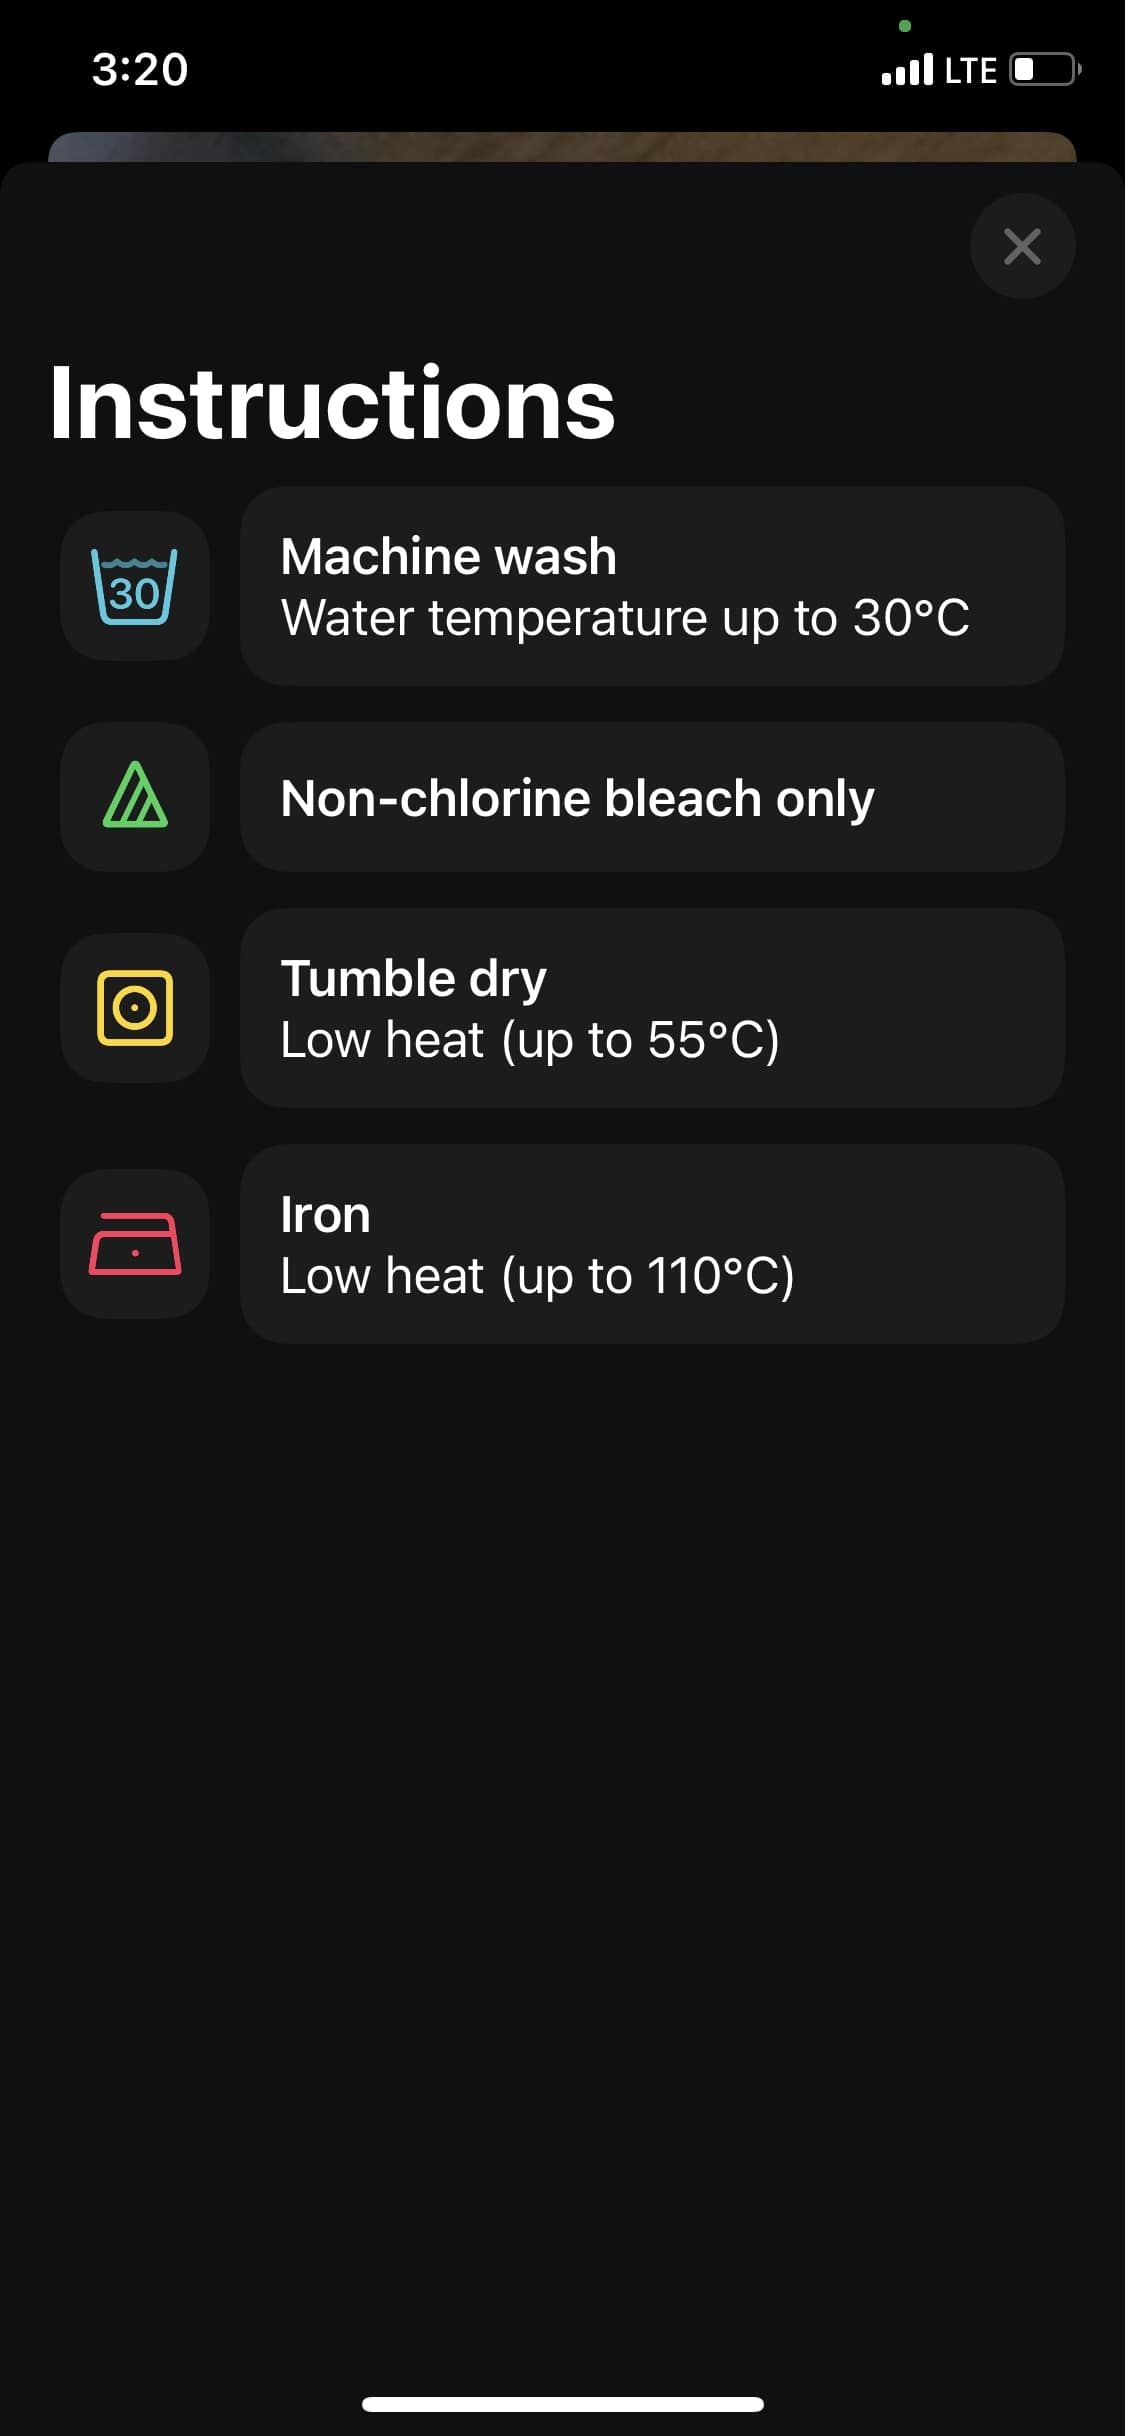 Laundry Lens App Instructions